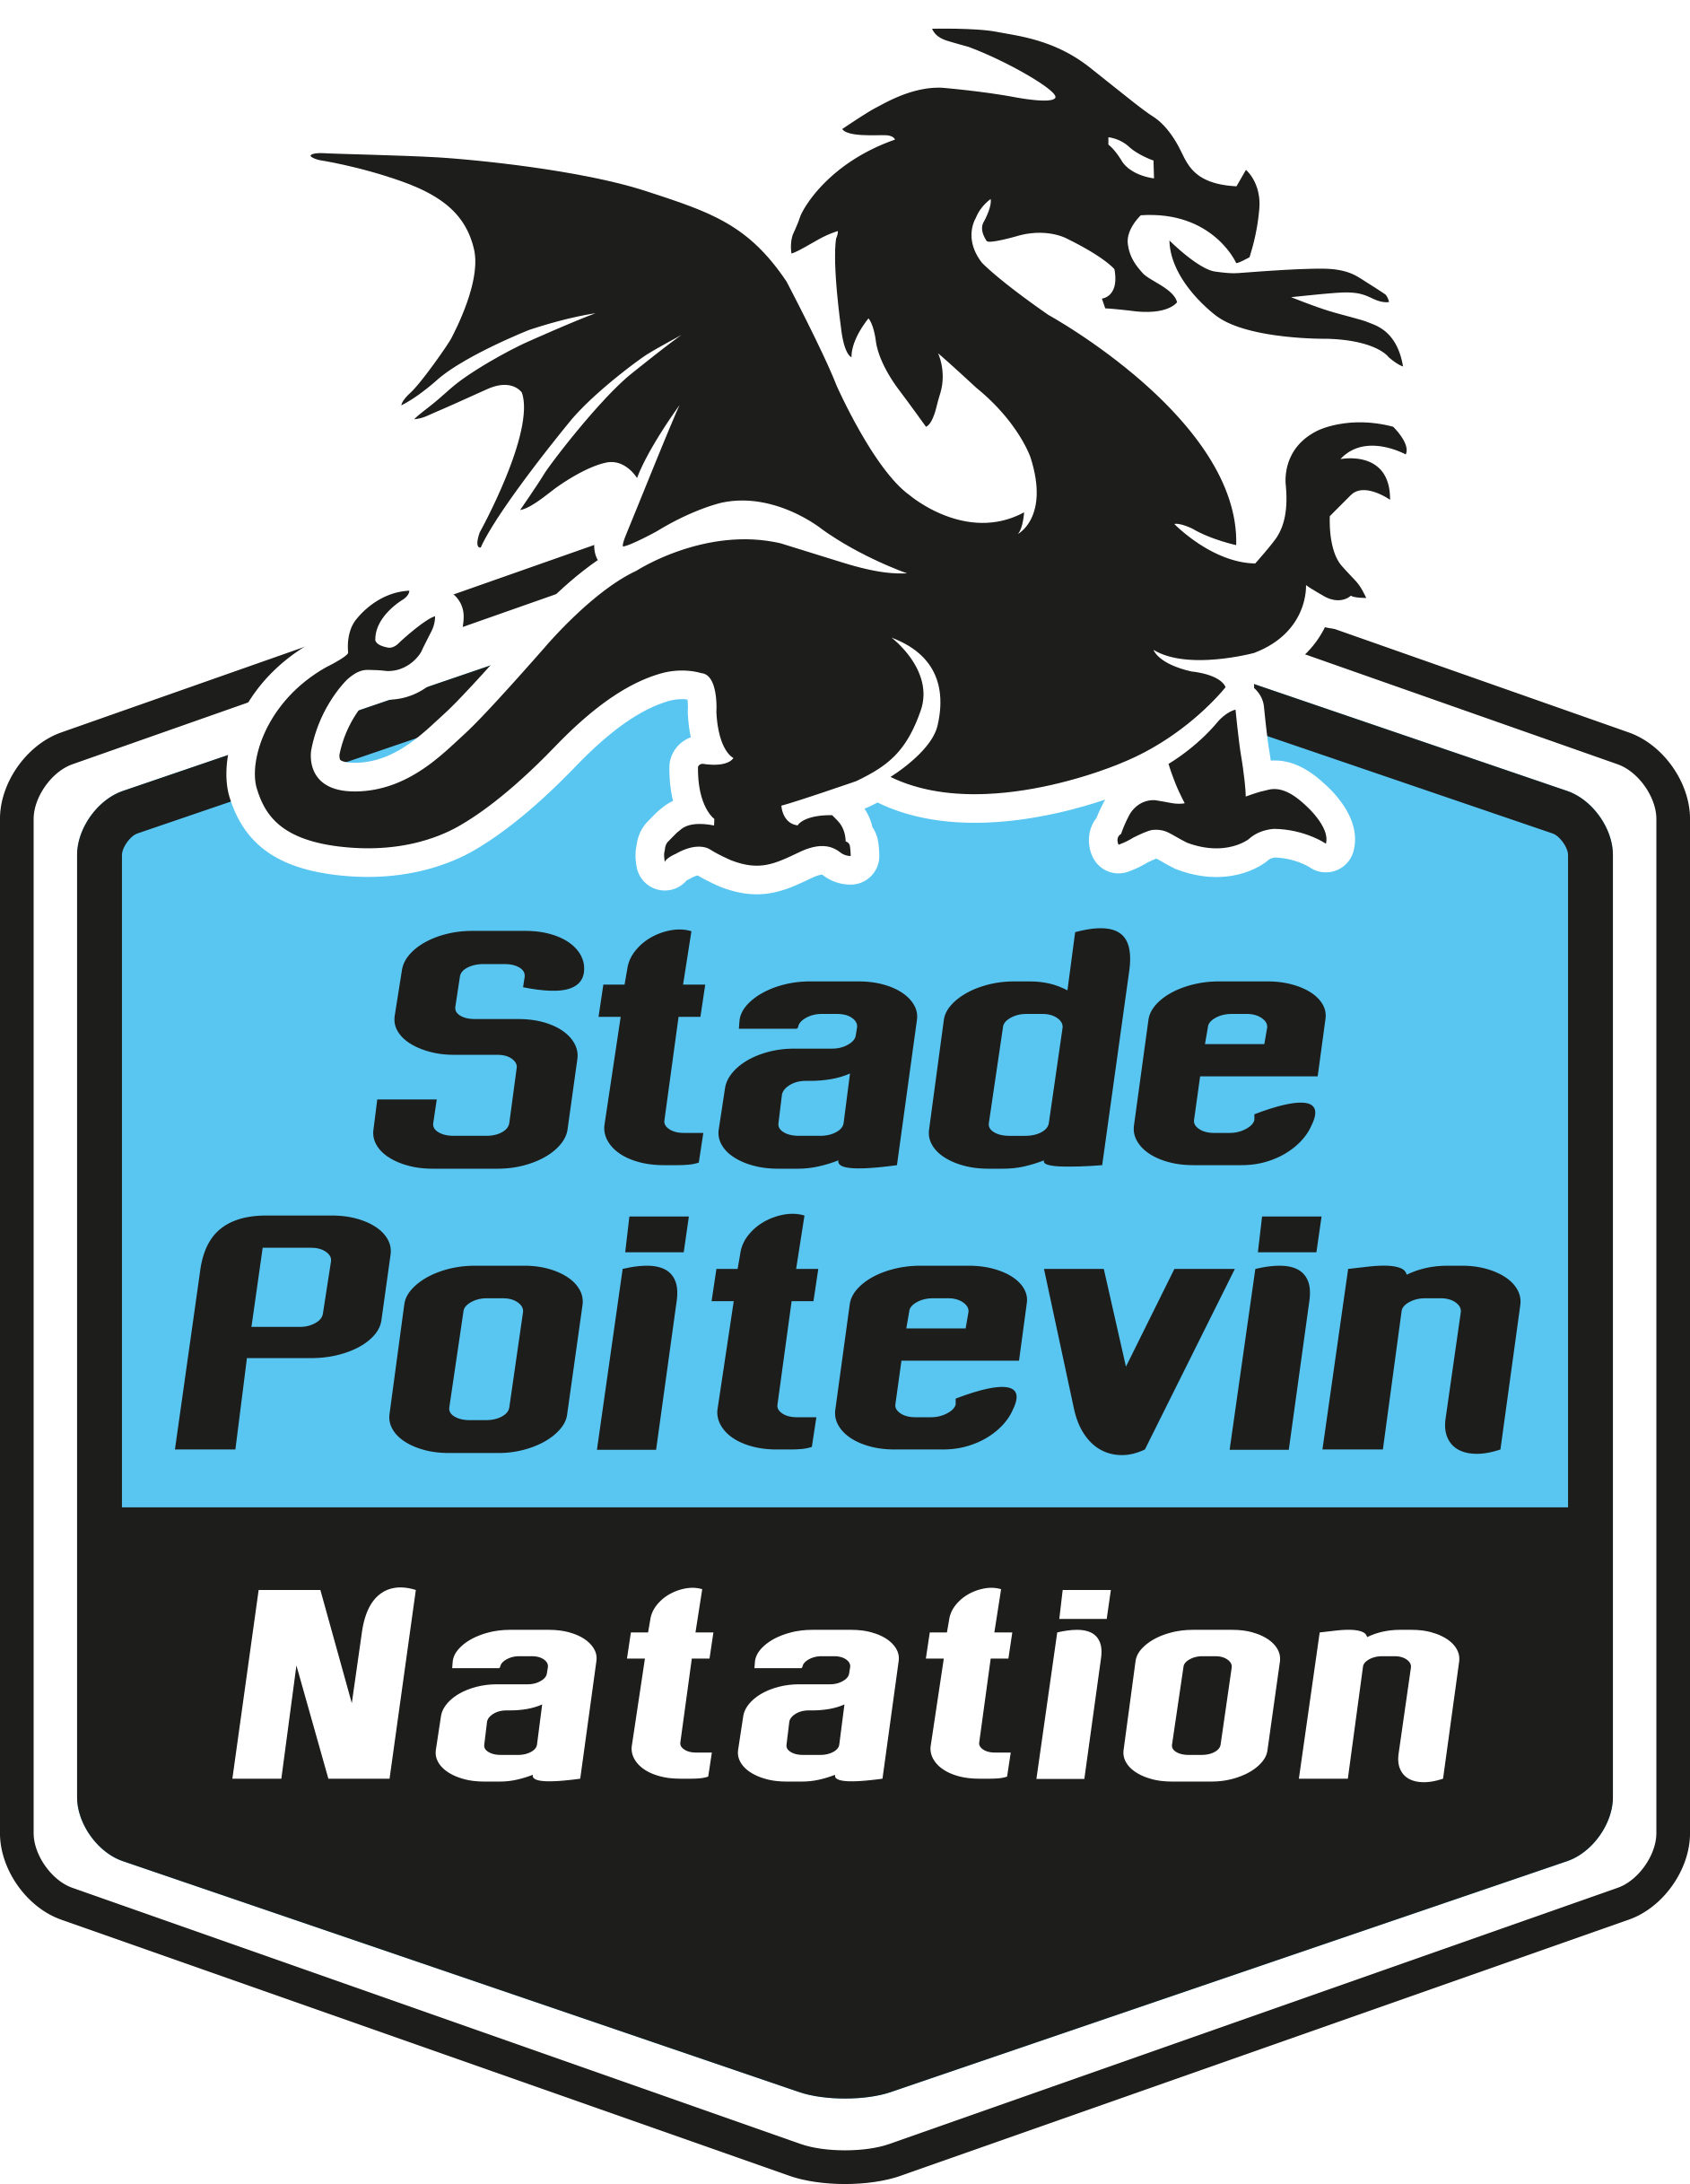 Stade Poitevin Natation